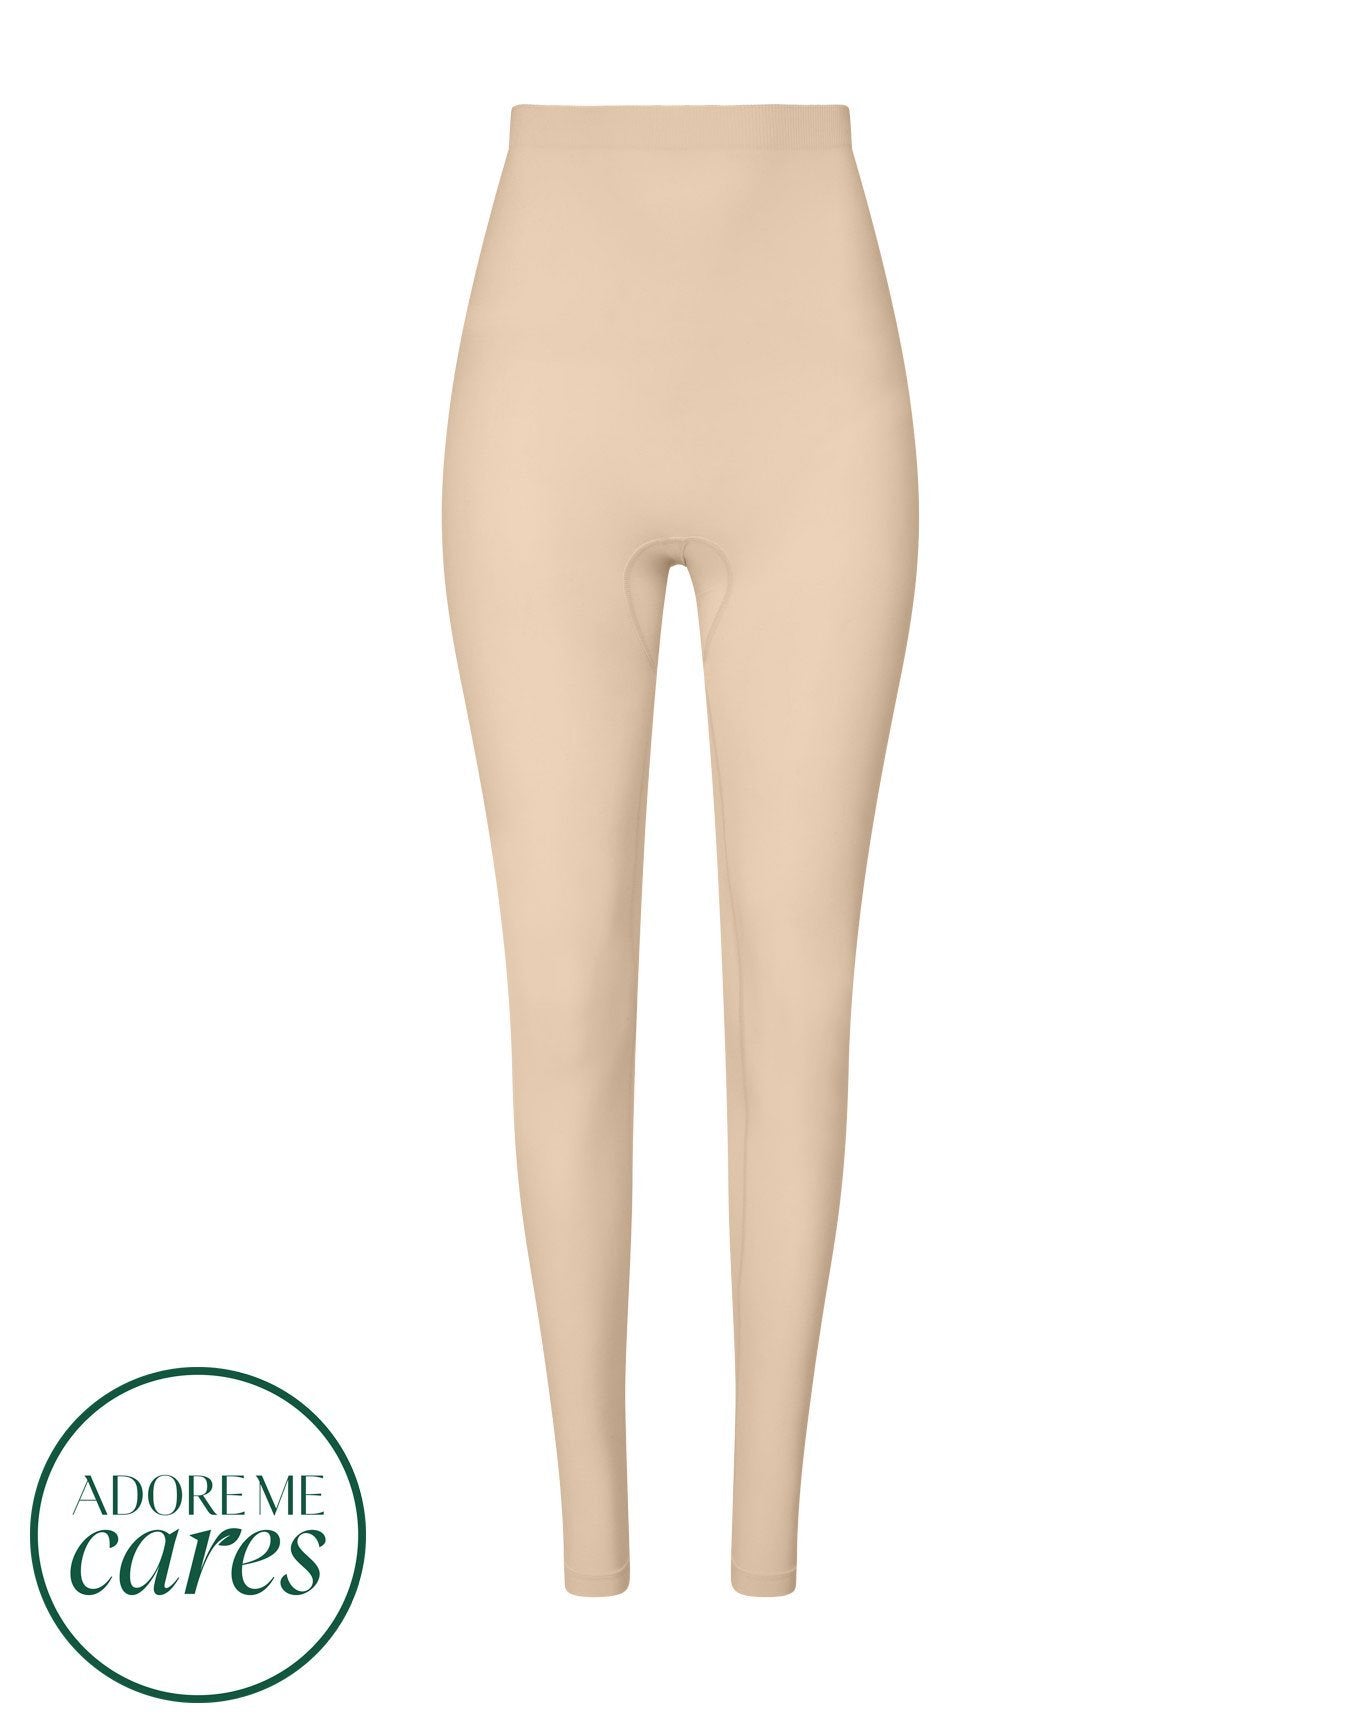 nueskin Lilya High-Compression Legging in color Dawn and shape legging